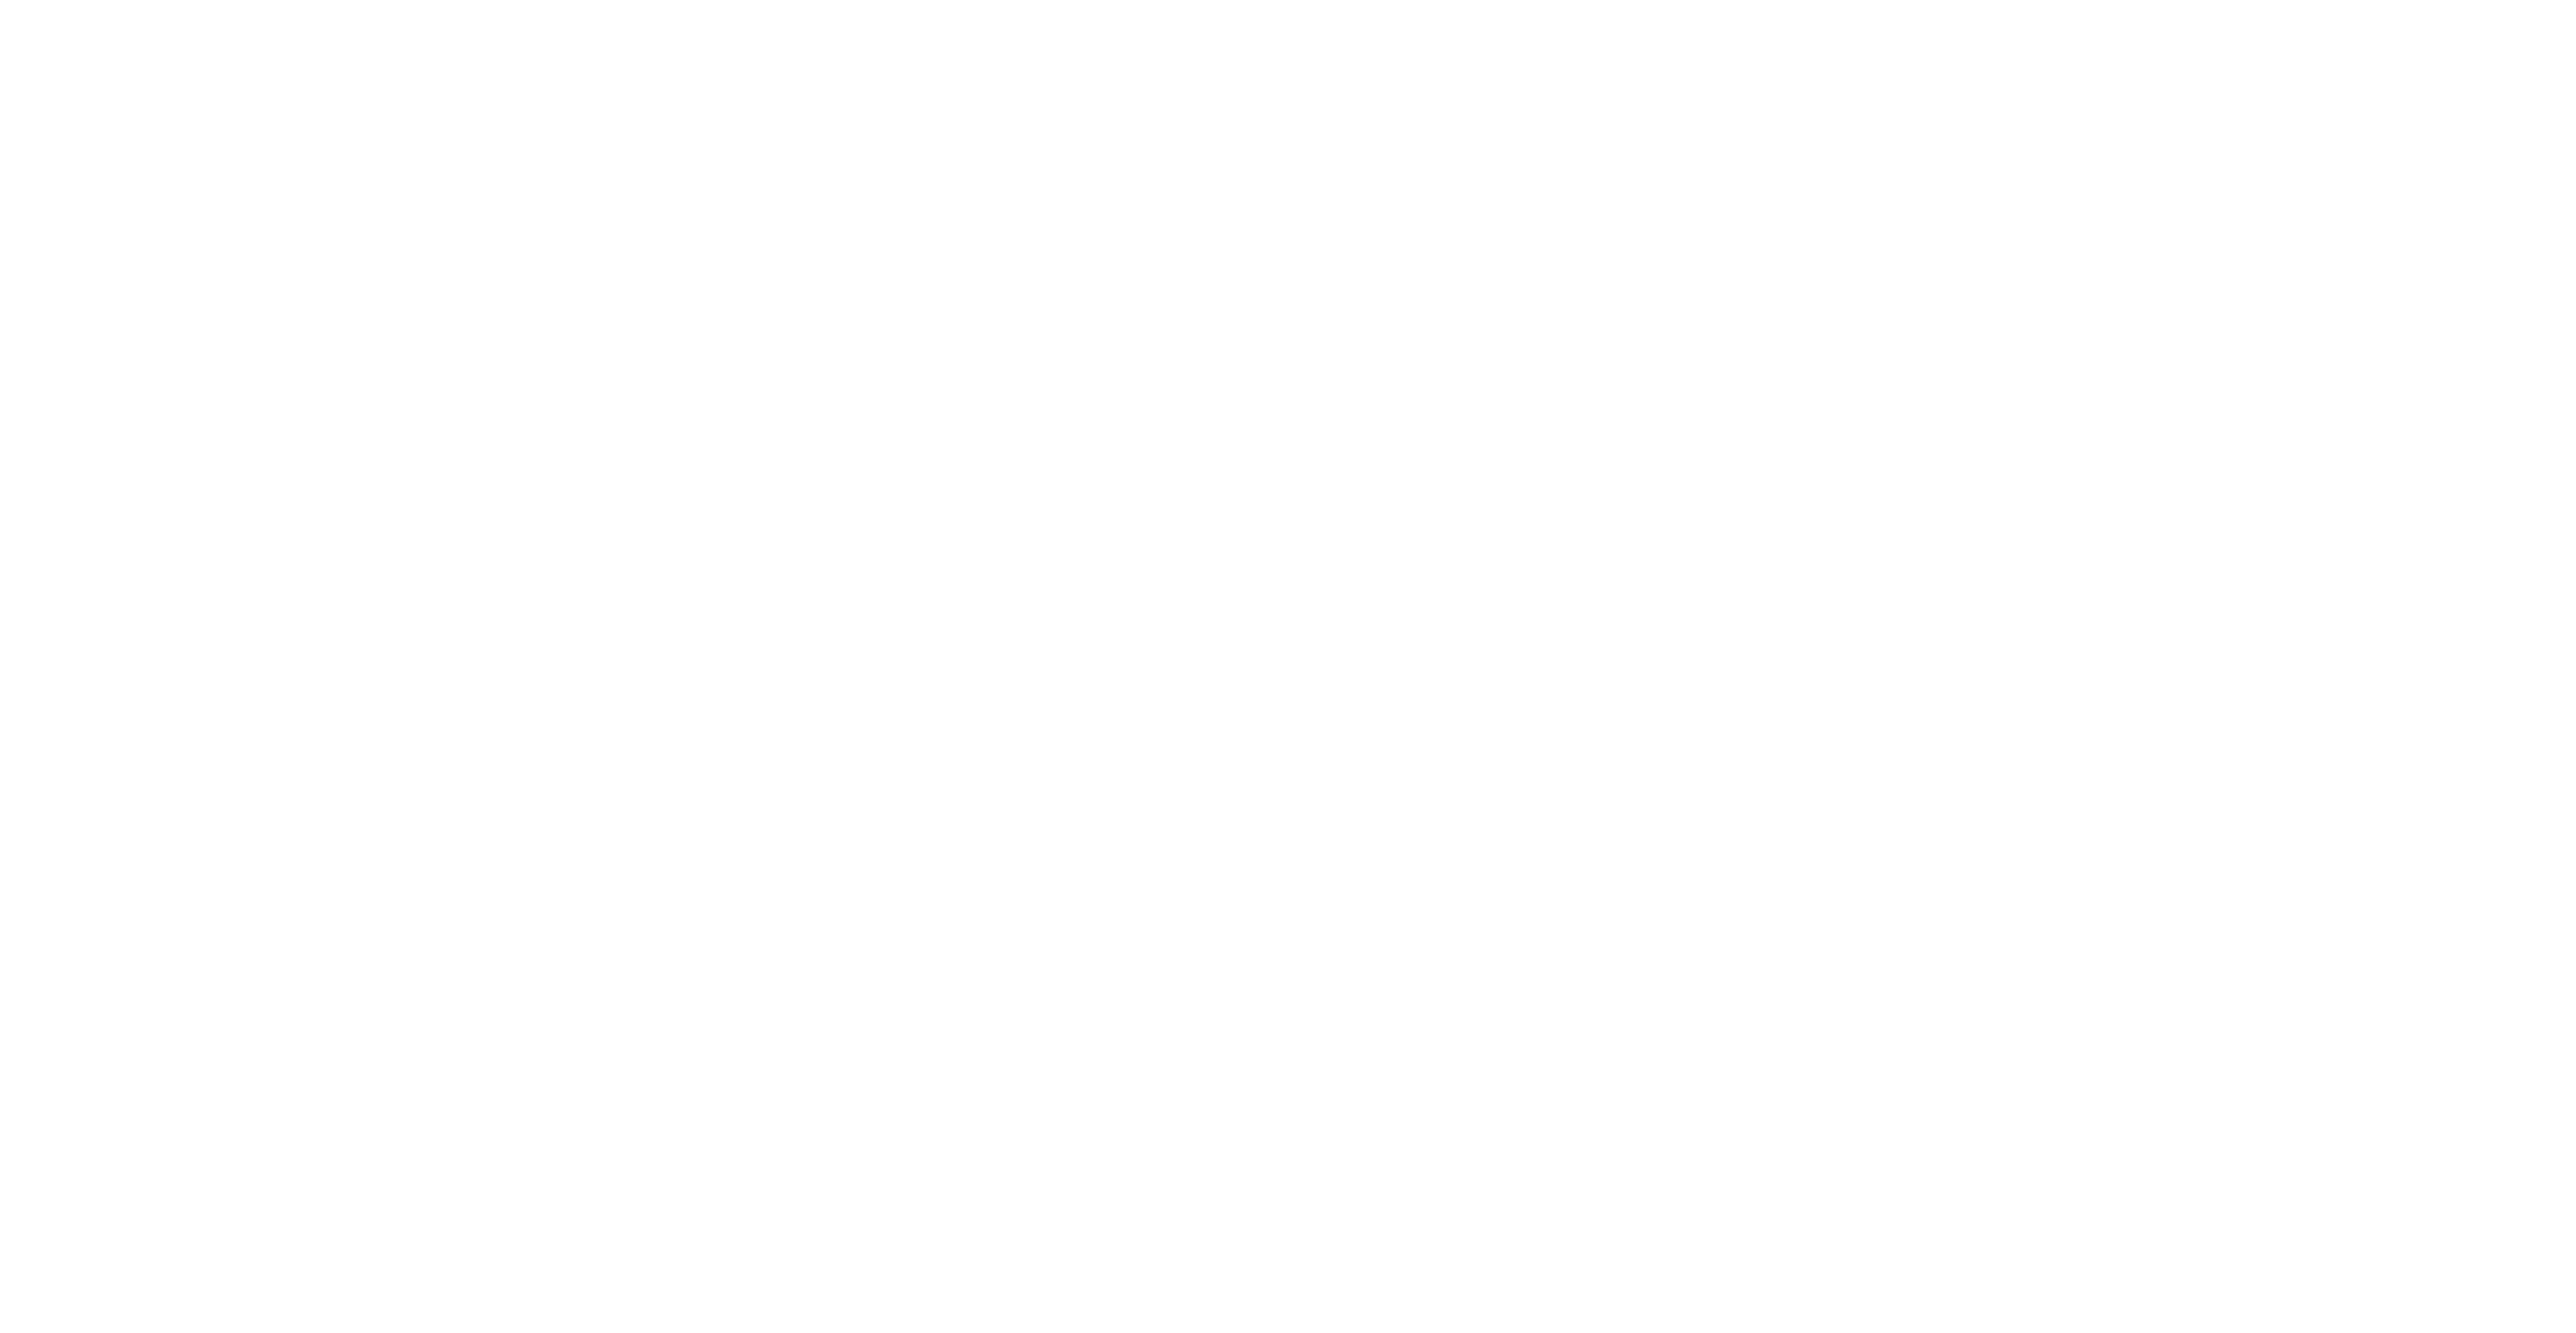 THe Alto Logo - Location